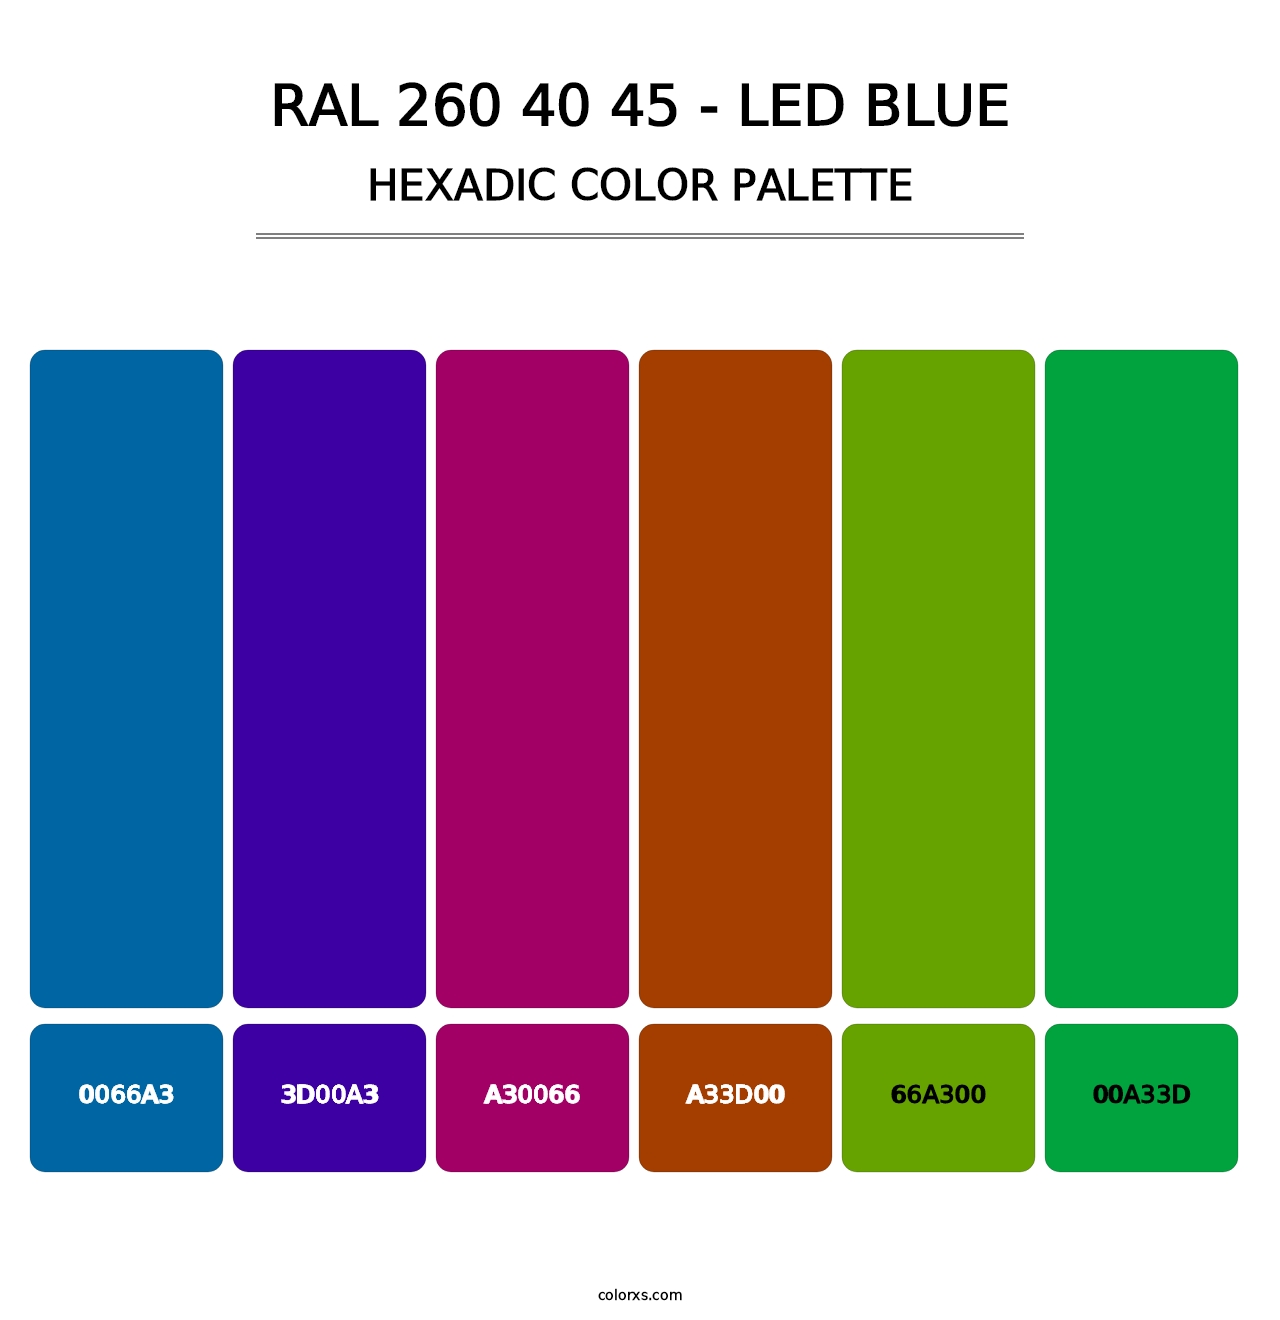 RAL 260 40 45 - LED Blue - Hexadic Color Palette